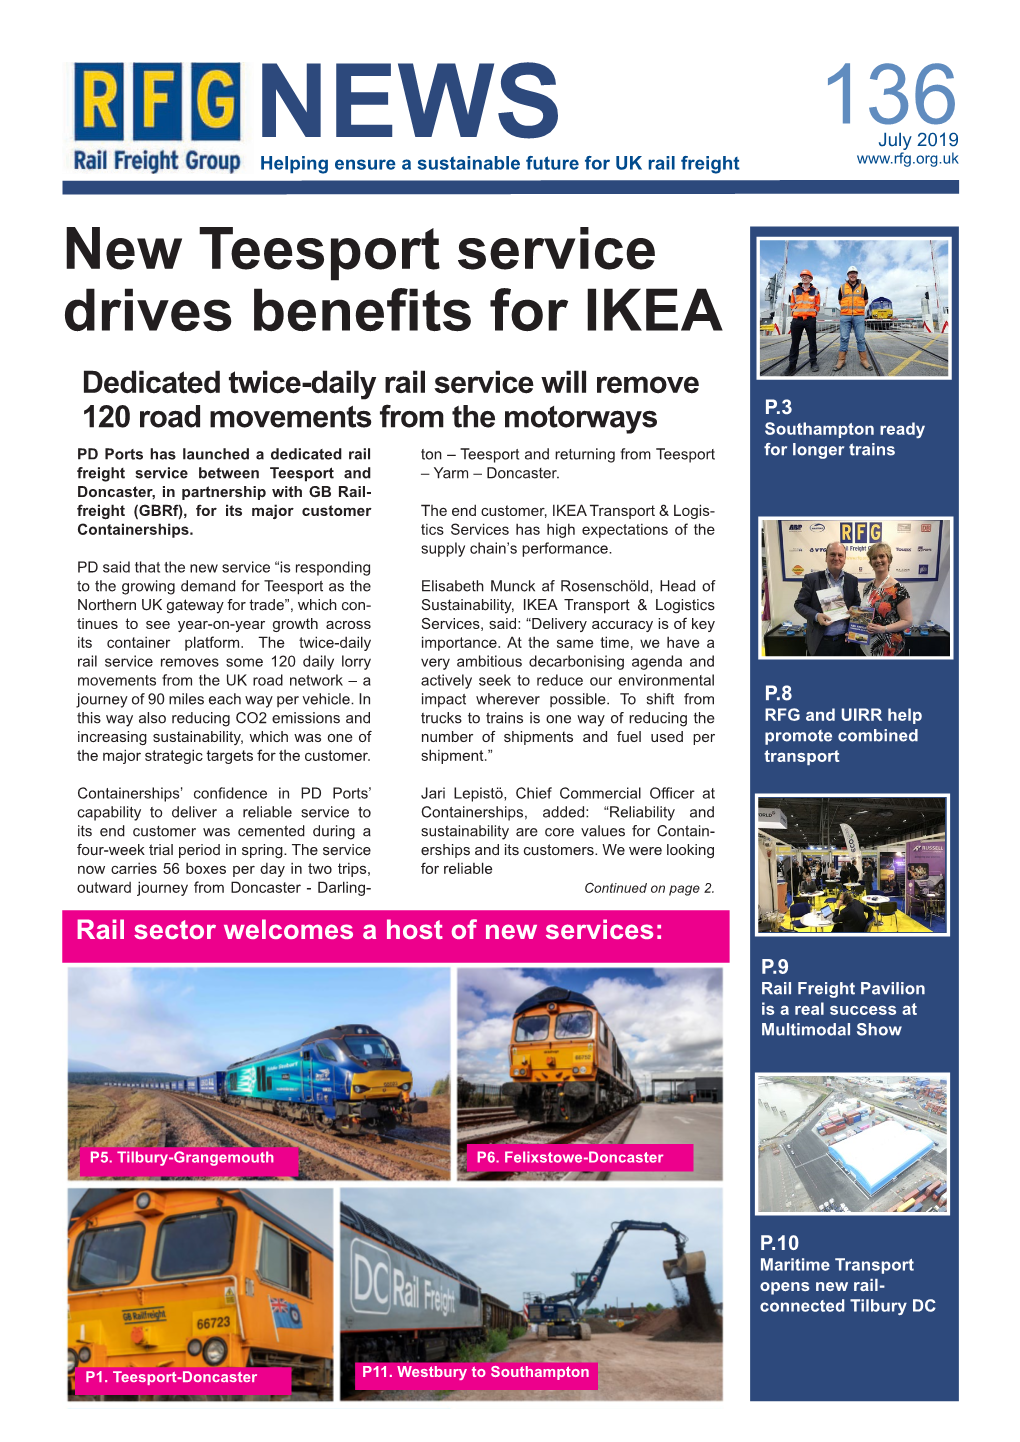 New Teesport Service Drives Benefits for IKEA